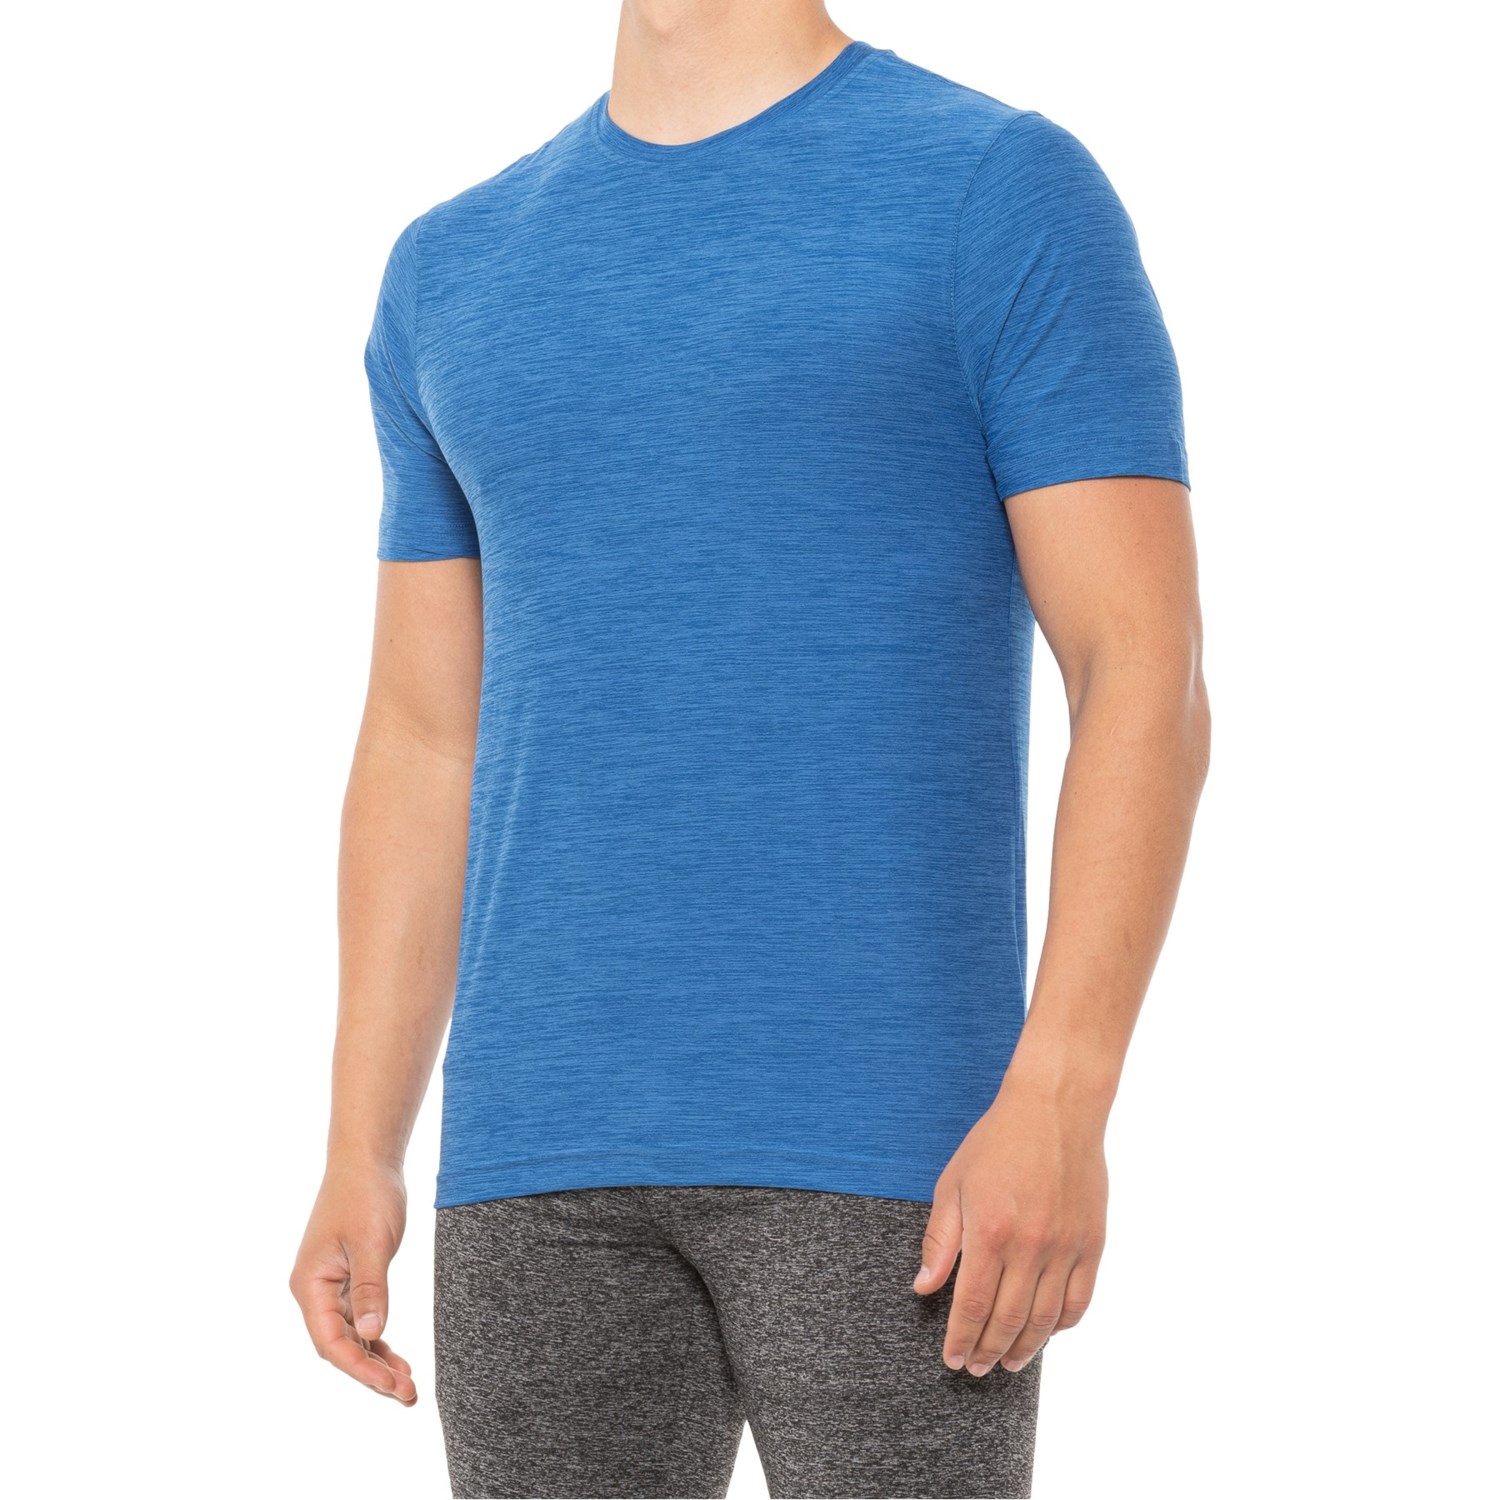 Leg3nd Ultra-Lux Space-Dye T-Shirt (For Men) - Save 50%